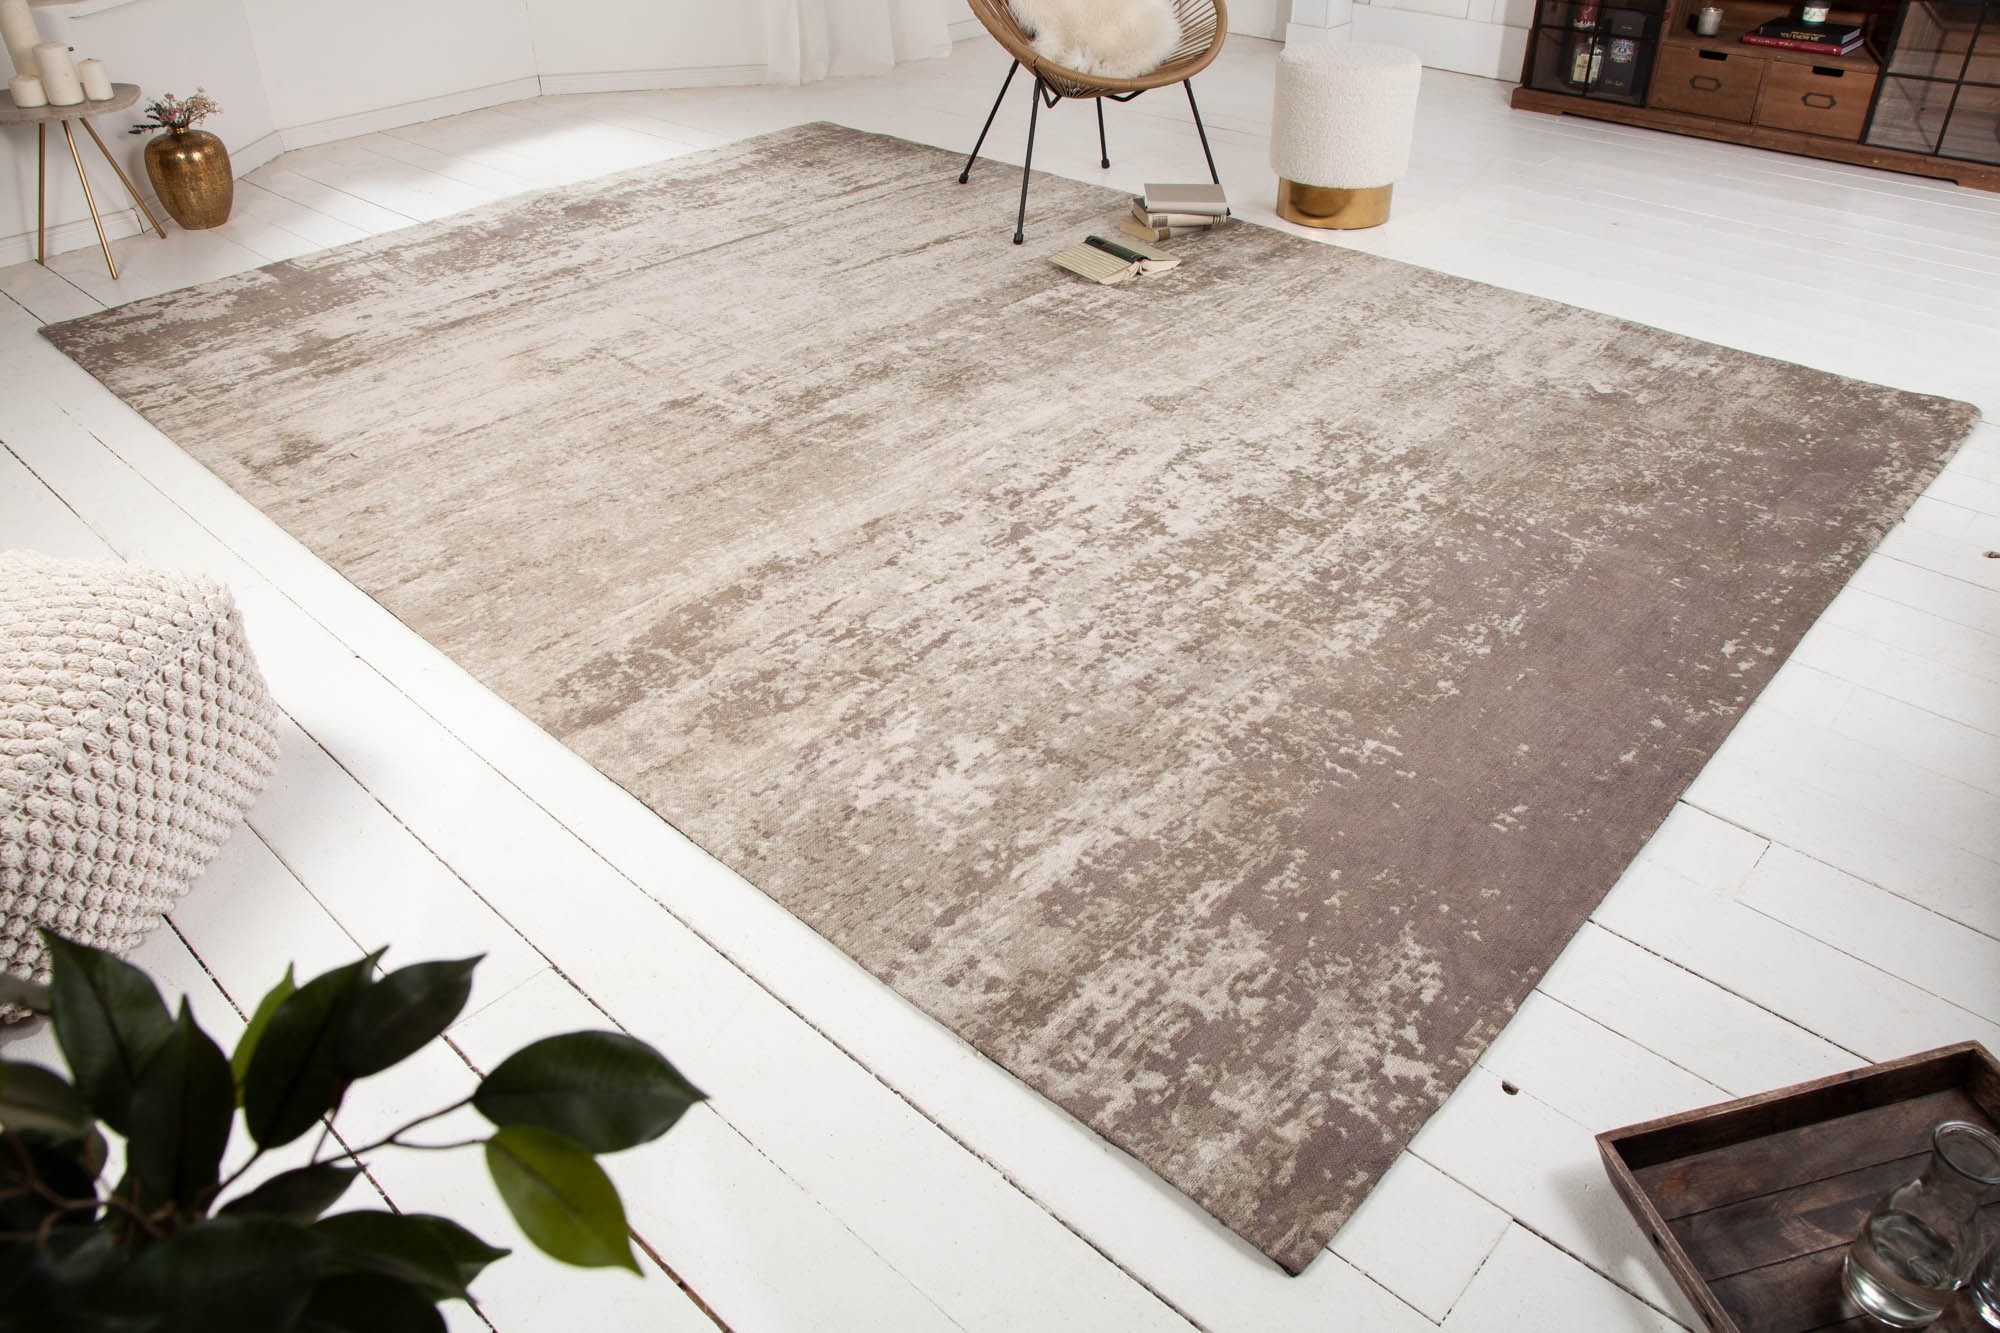 Estila Orientální nadčasový obdélníkový koberec Adassil béžové barvy 350cm